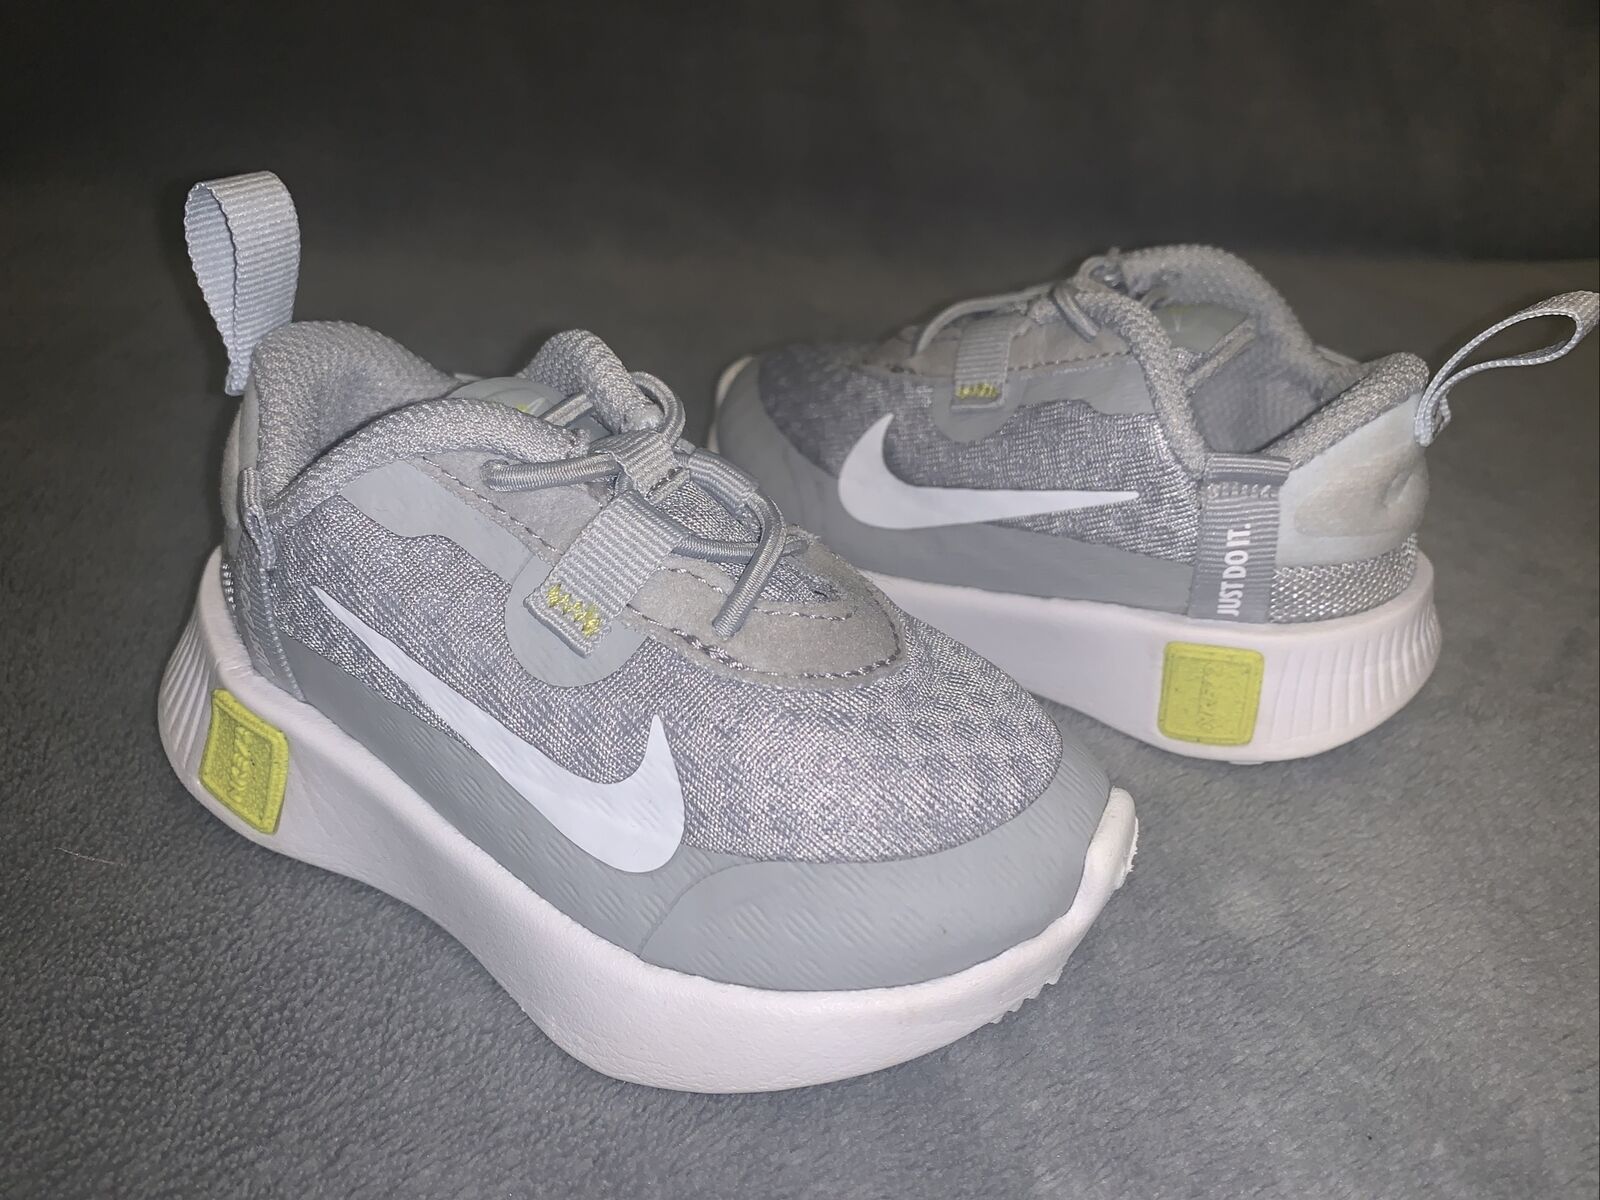 Toddler Nike ‘Reposto’ Running/Athletic Shoes - Size 5C